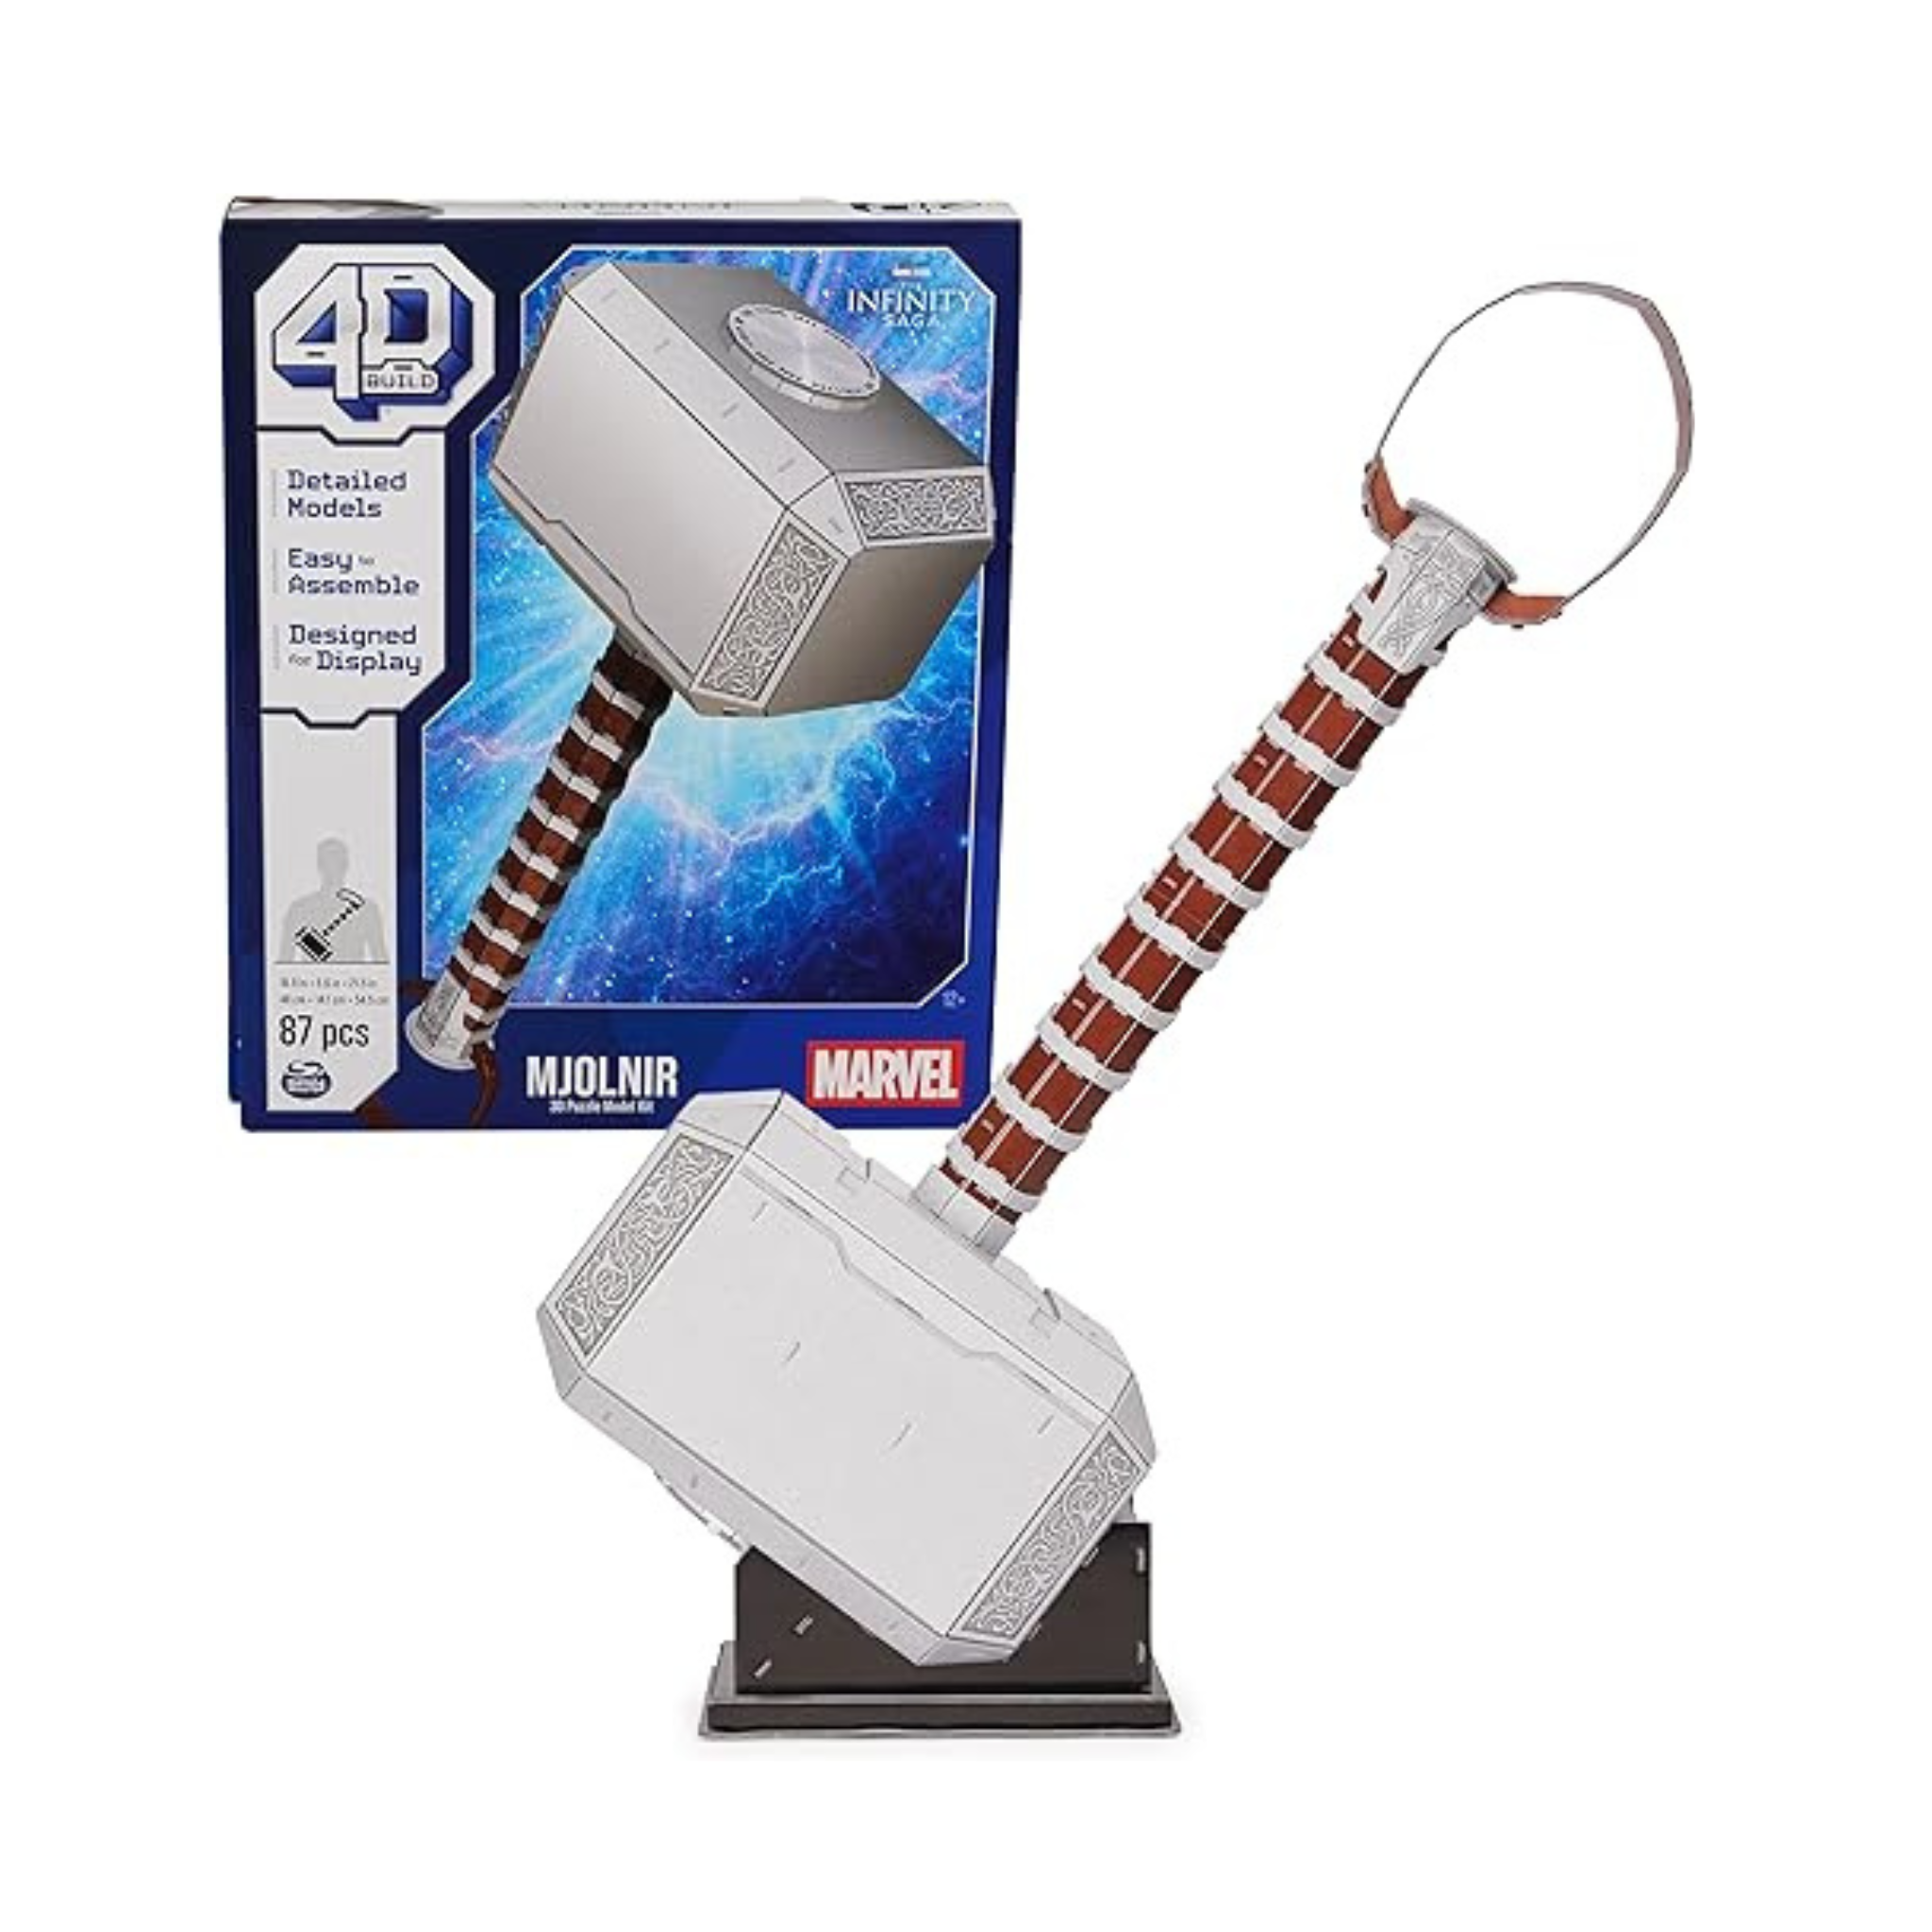 87-Piece 4D Build Marvel Mjolnir Thor's Hammer 3D Puzzle Model Kit w/ Stand